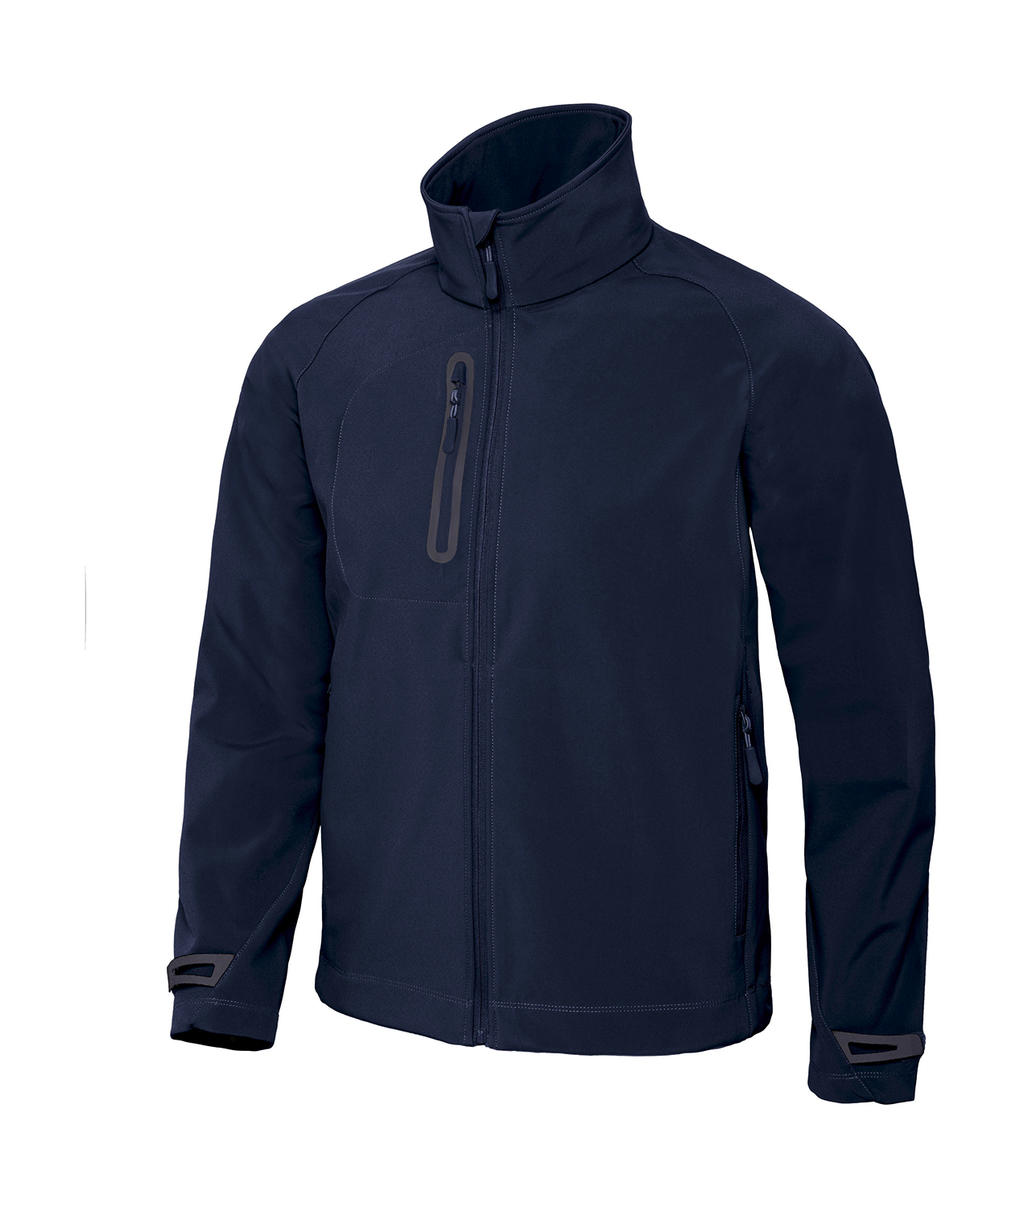  X-Lite Softshell/men Jacket in Farbe Navy